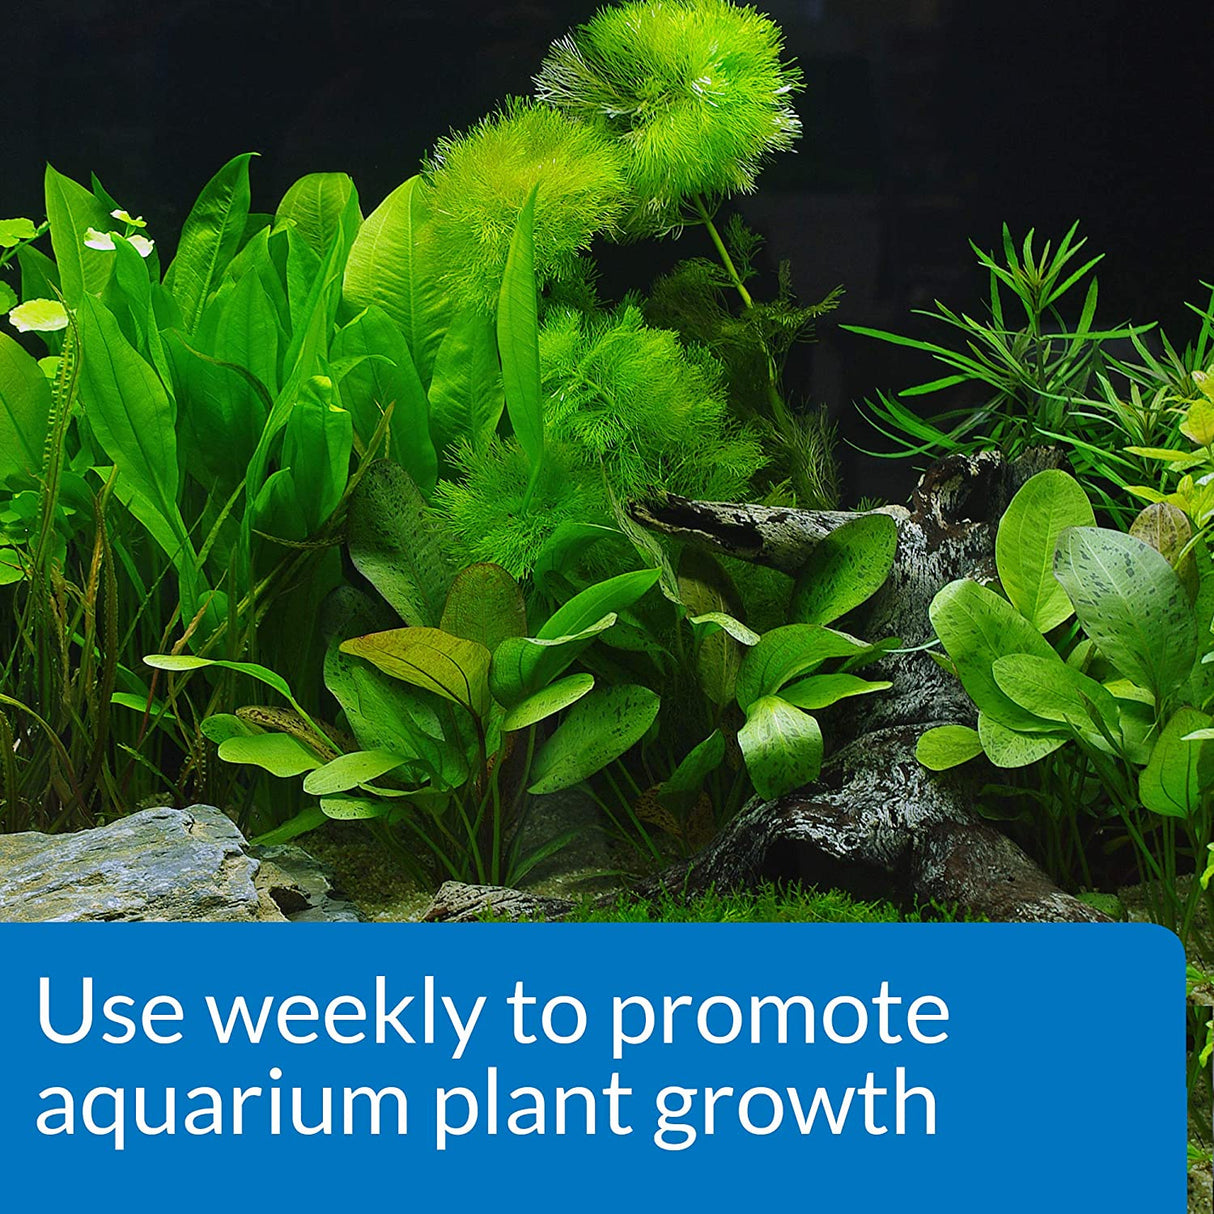 54 oz (3 x 18 oz) API Leaf Zone Promotes Aquarium Plant Growth